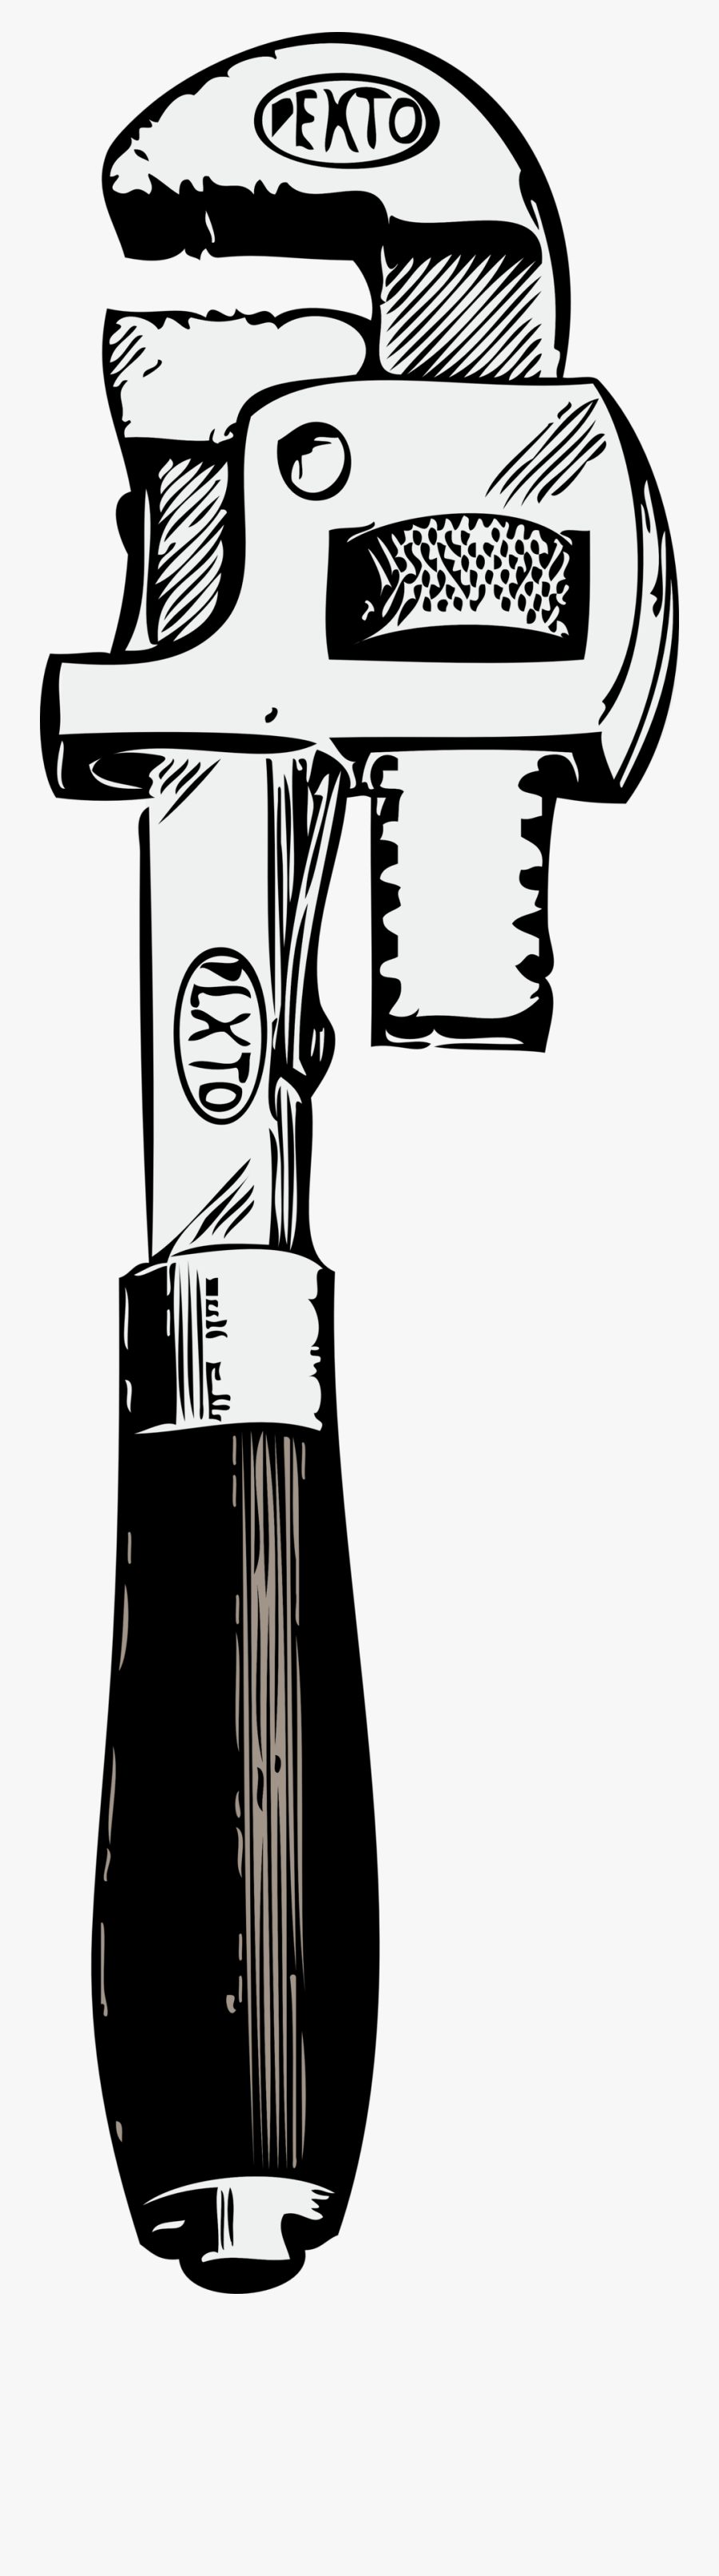 Public Domain Clip Art Image - Pipe Wrench Clipart, Transparent Clipart